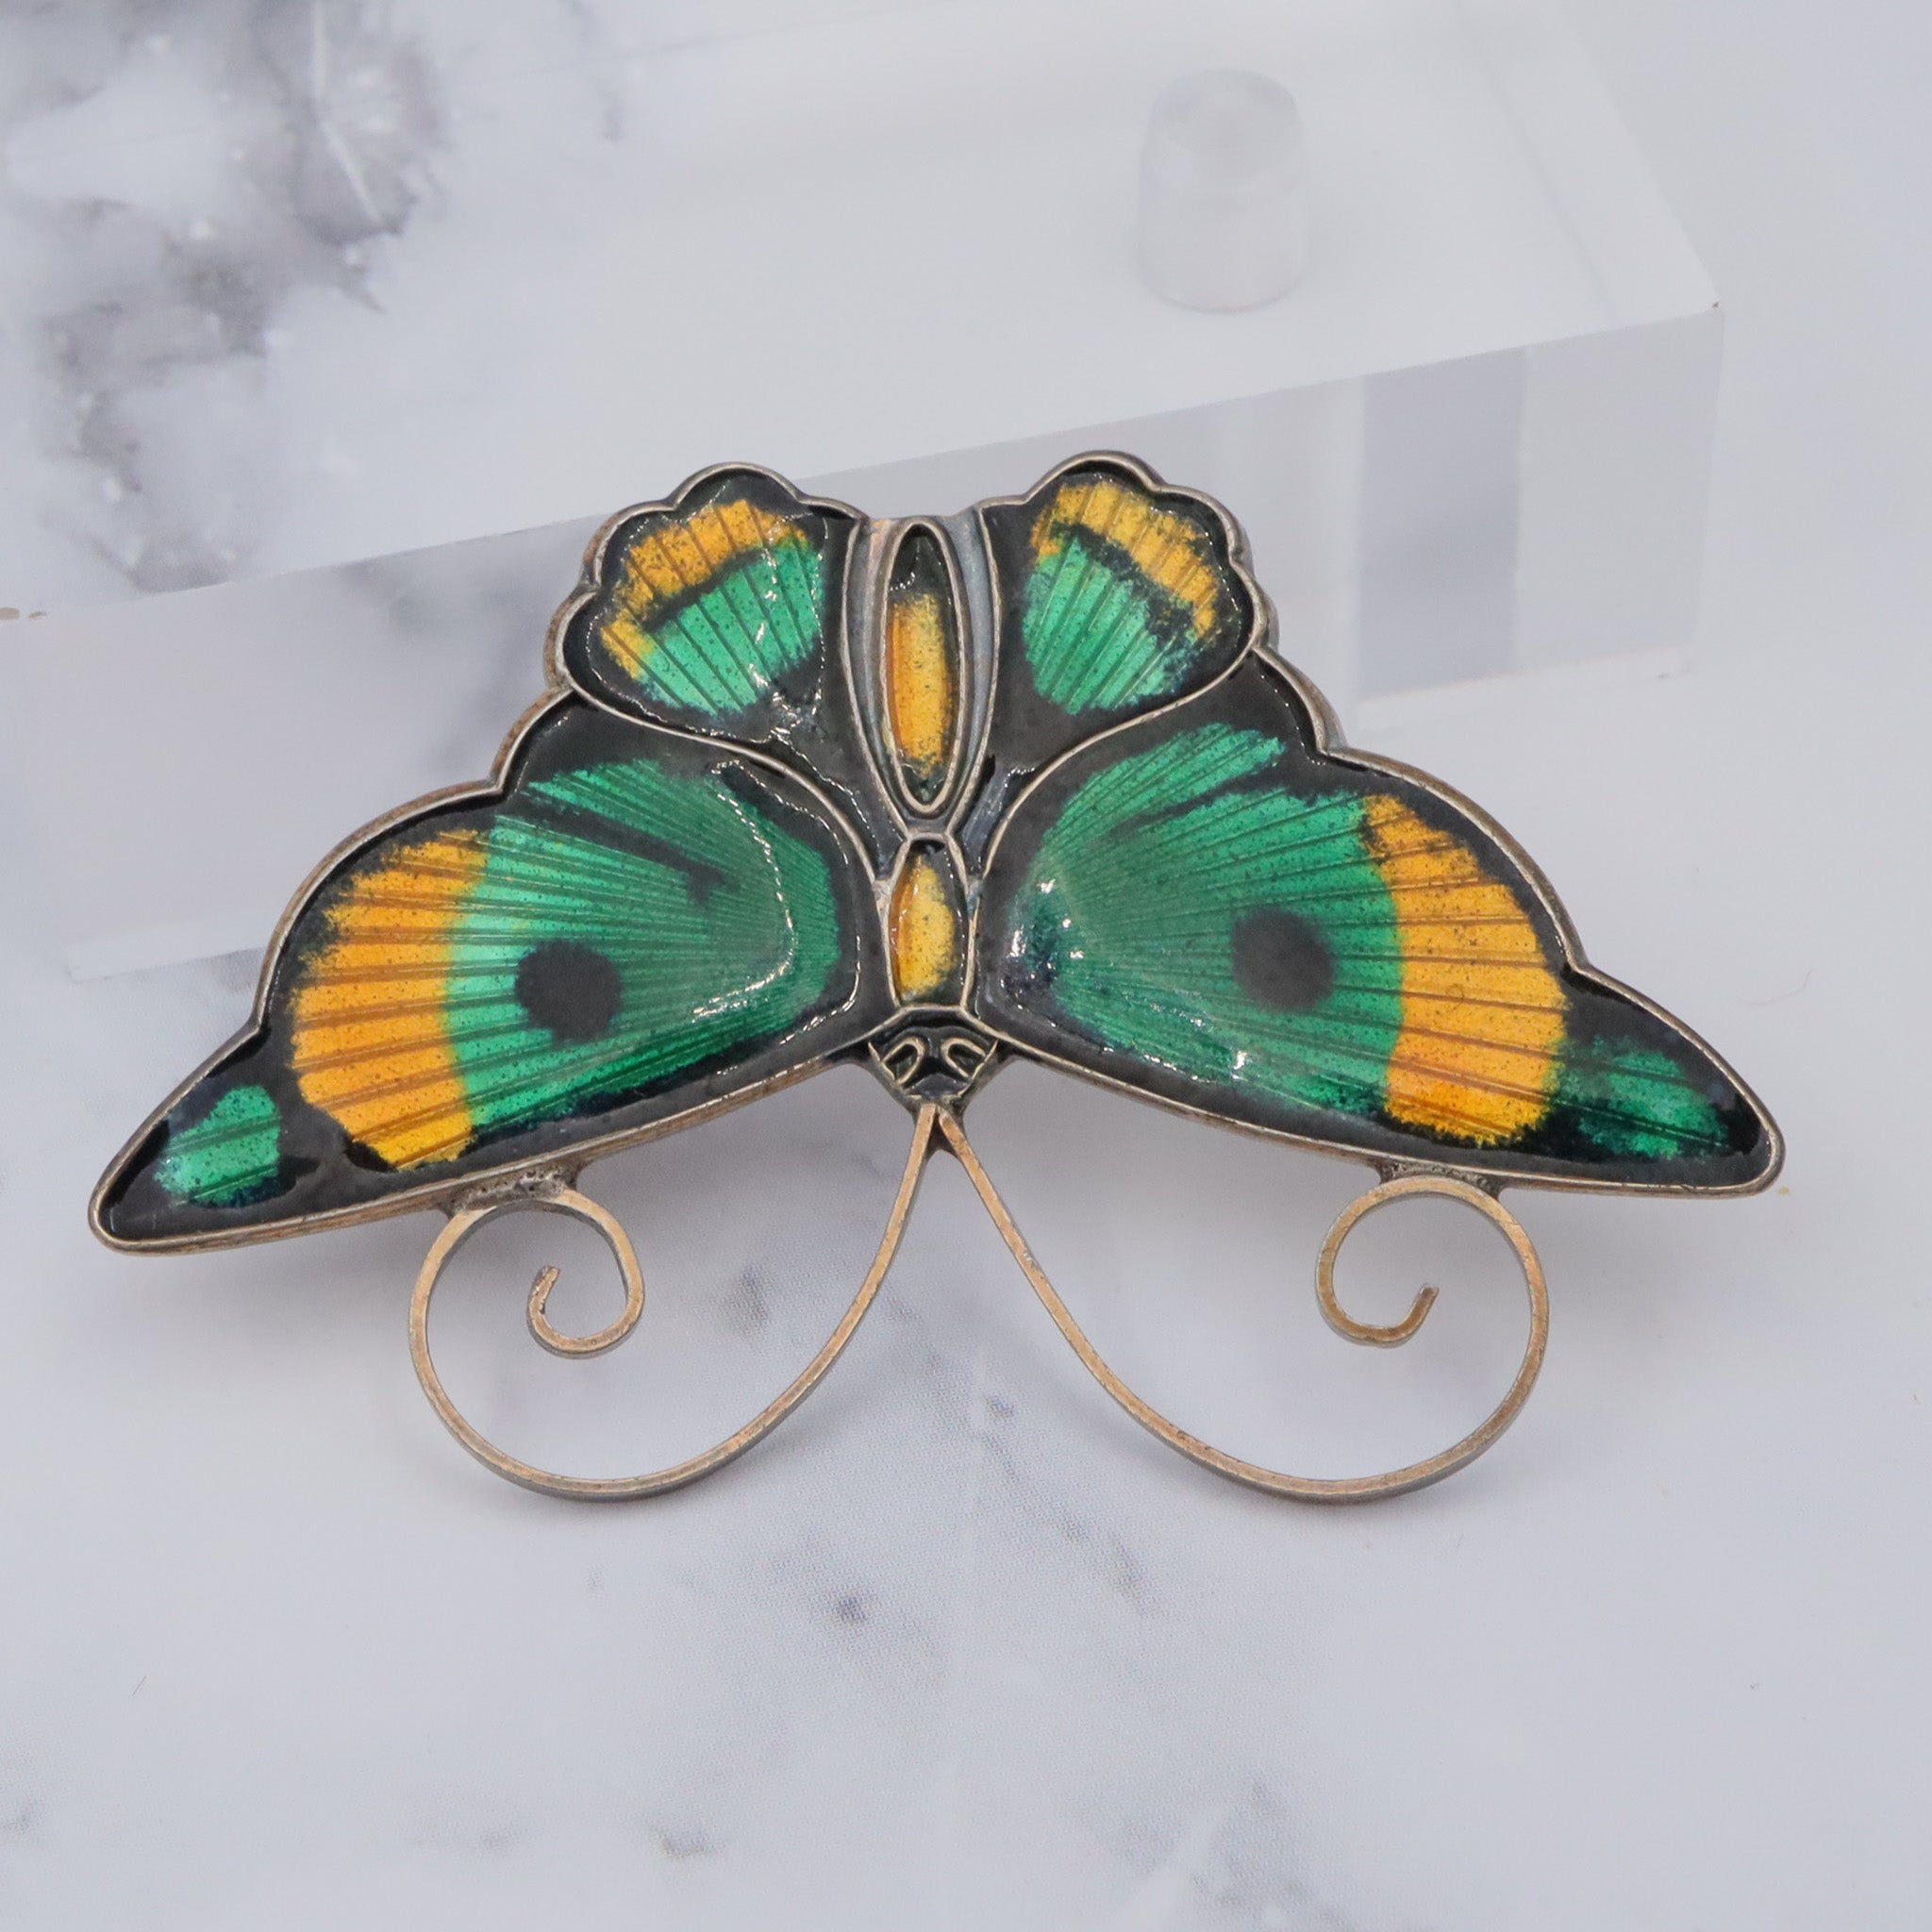 Vintage David Anderson Norway sterling & guilloche enamel butterfly brooch